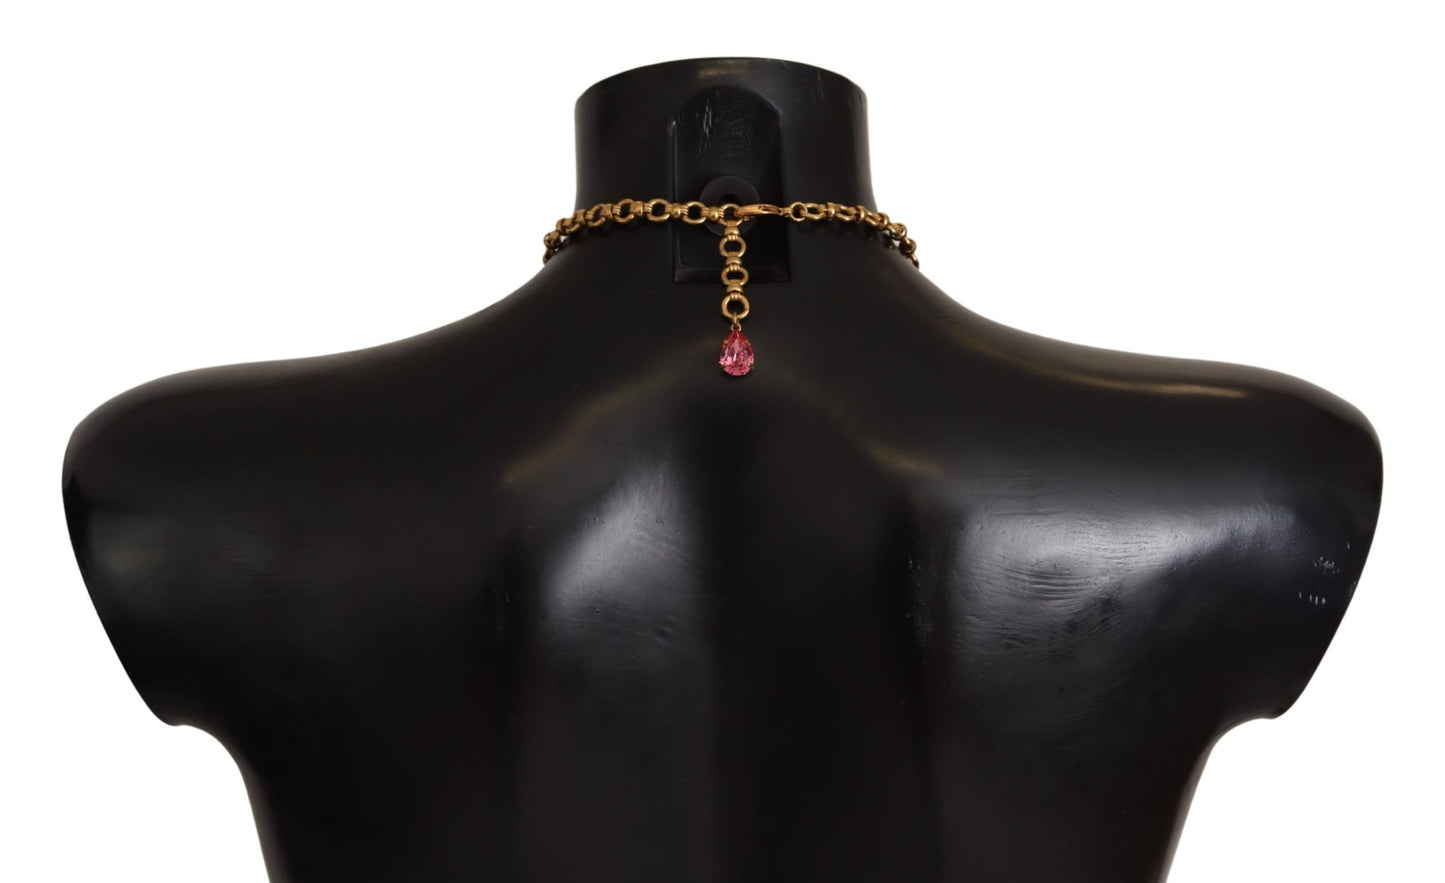 Dolce & Gabbana Gold Messing Sizilien Früchte Roses Statement Halskette